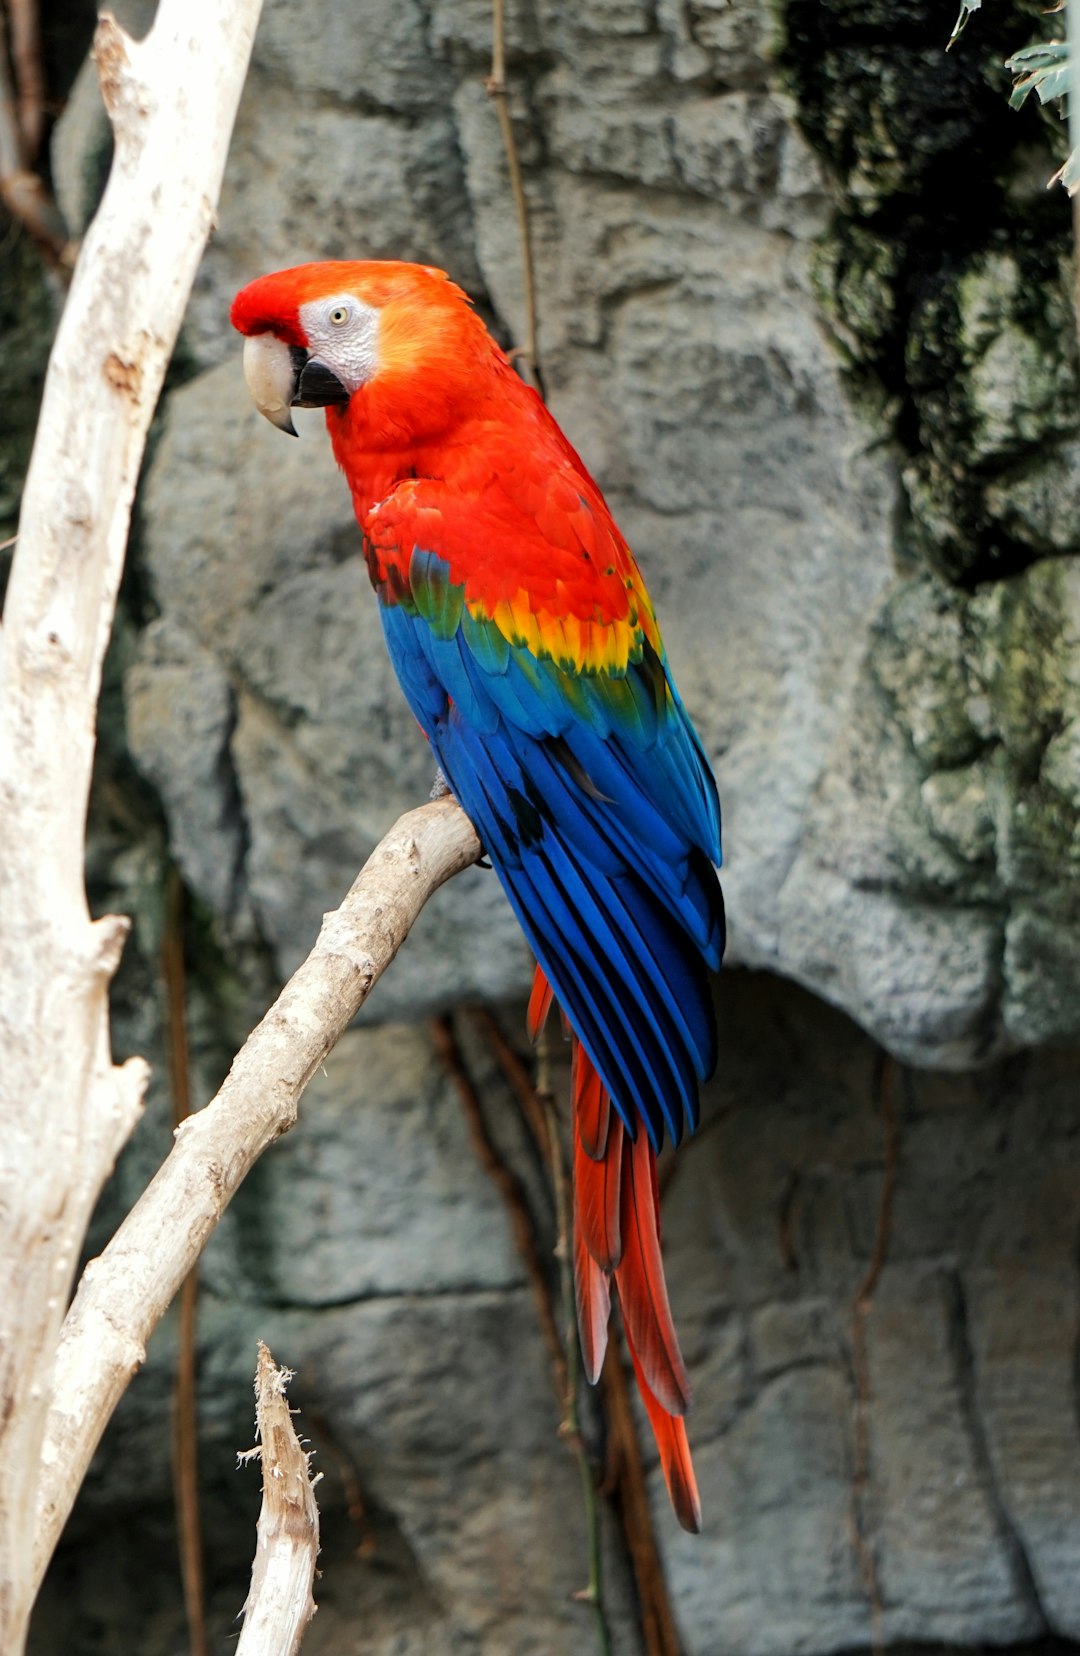 Macaw enclosure sun damage